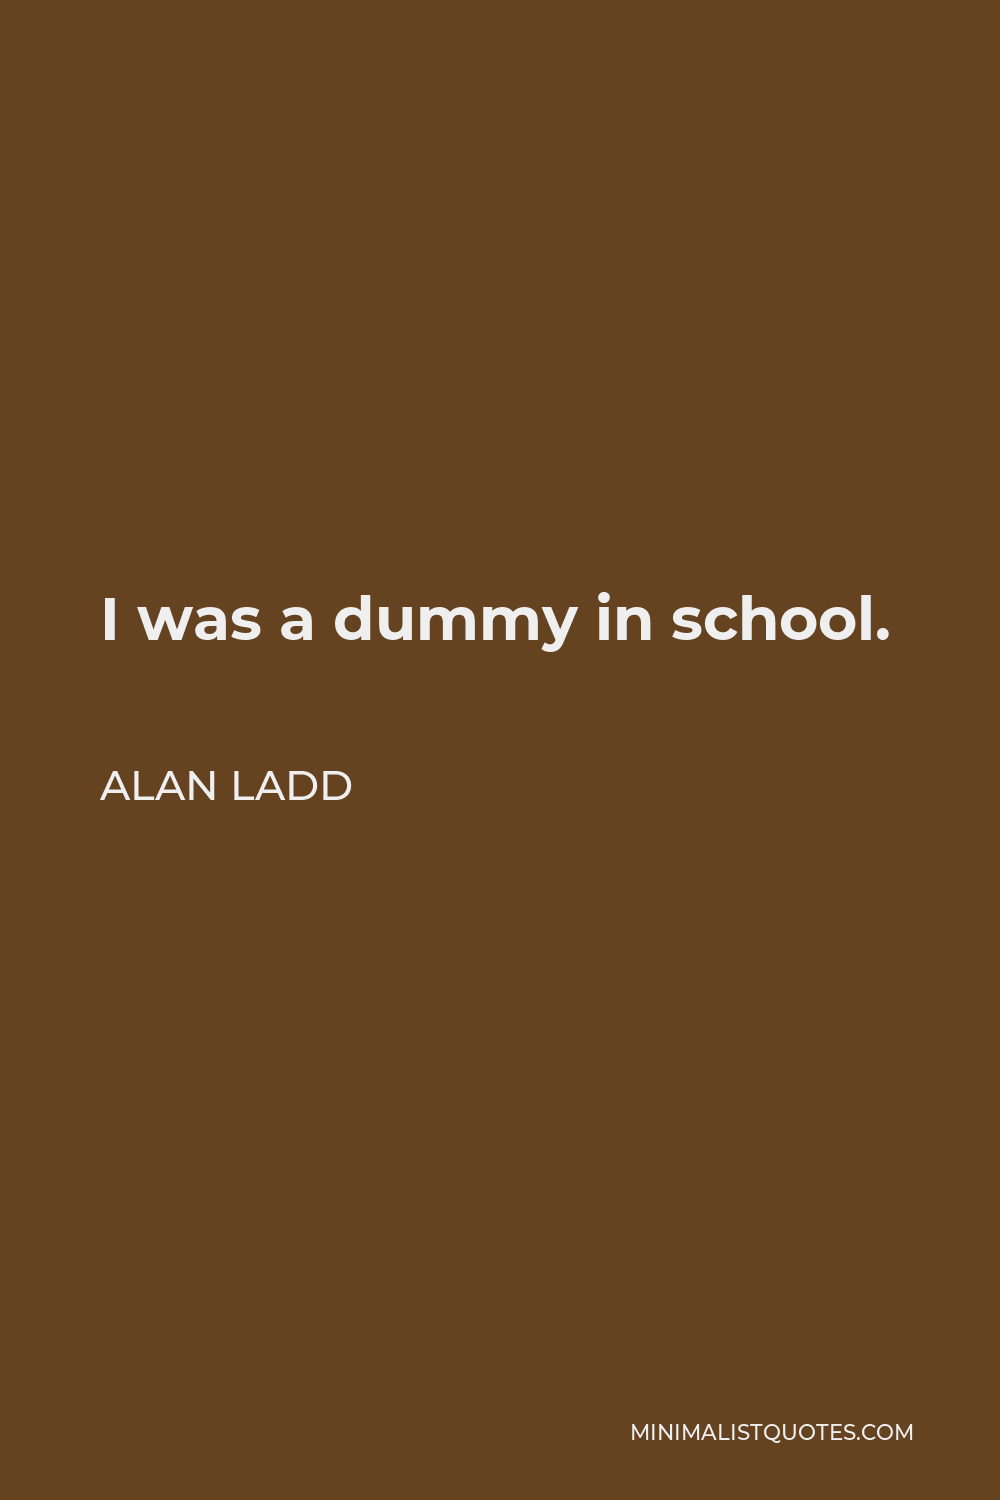 Alan Ladd Quote - I was a dummy in school.